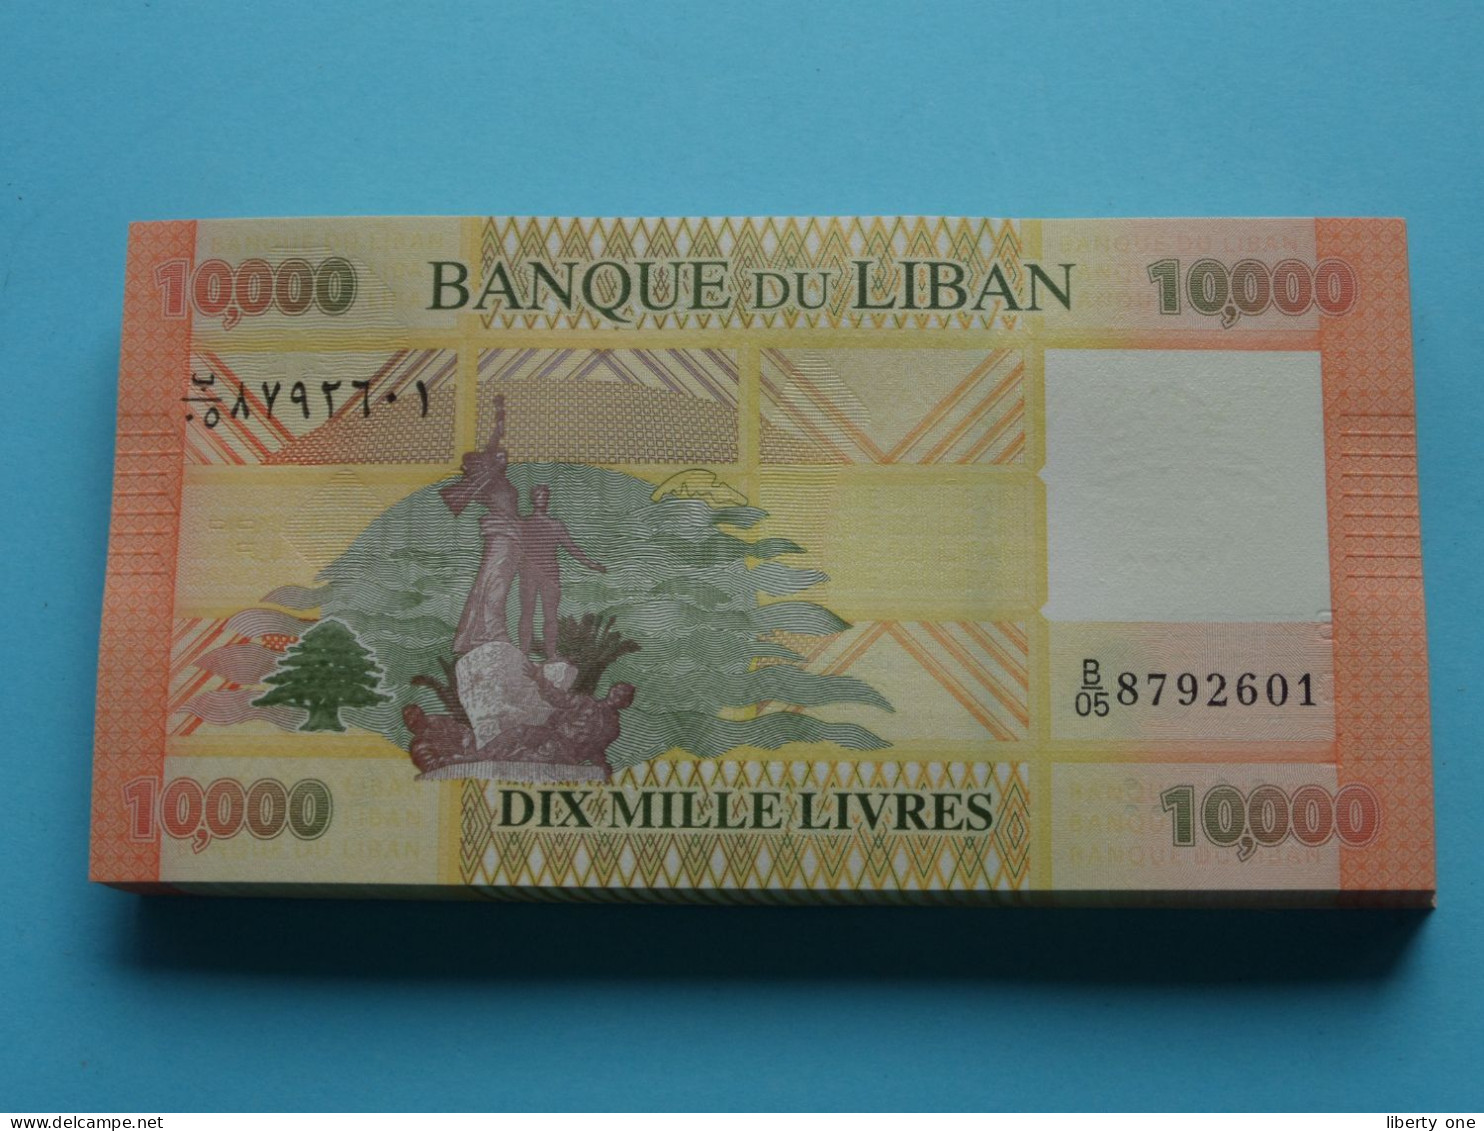 10.000 Dix Mille Livres ( Banque Du Liban ) Lebanon 2014 ( For Grade, Please See SCANS ) UNC ! - Libano